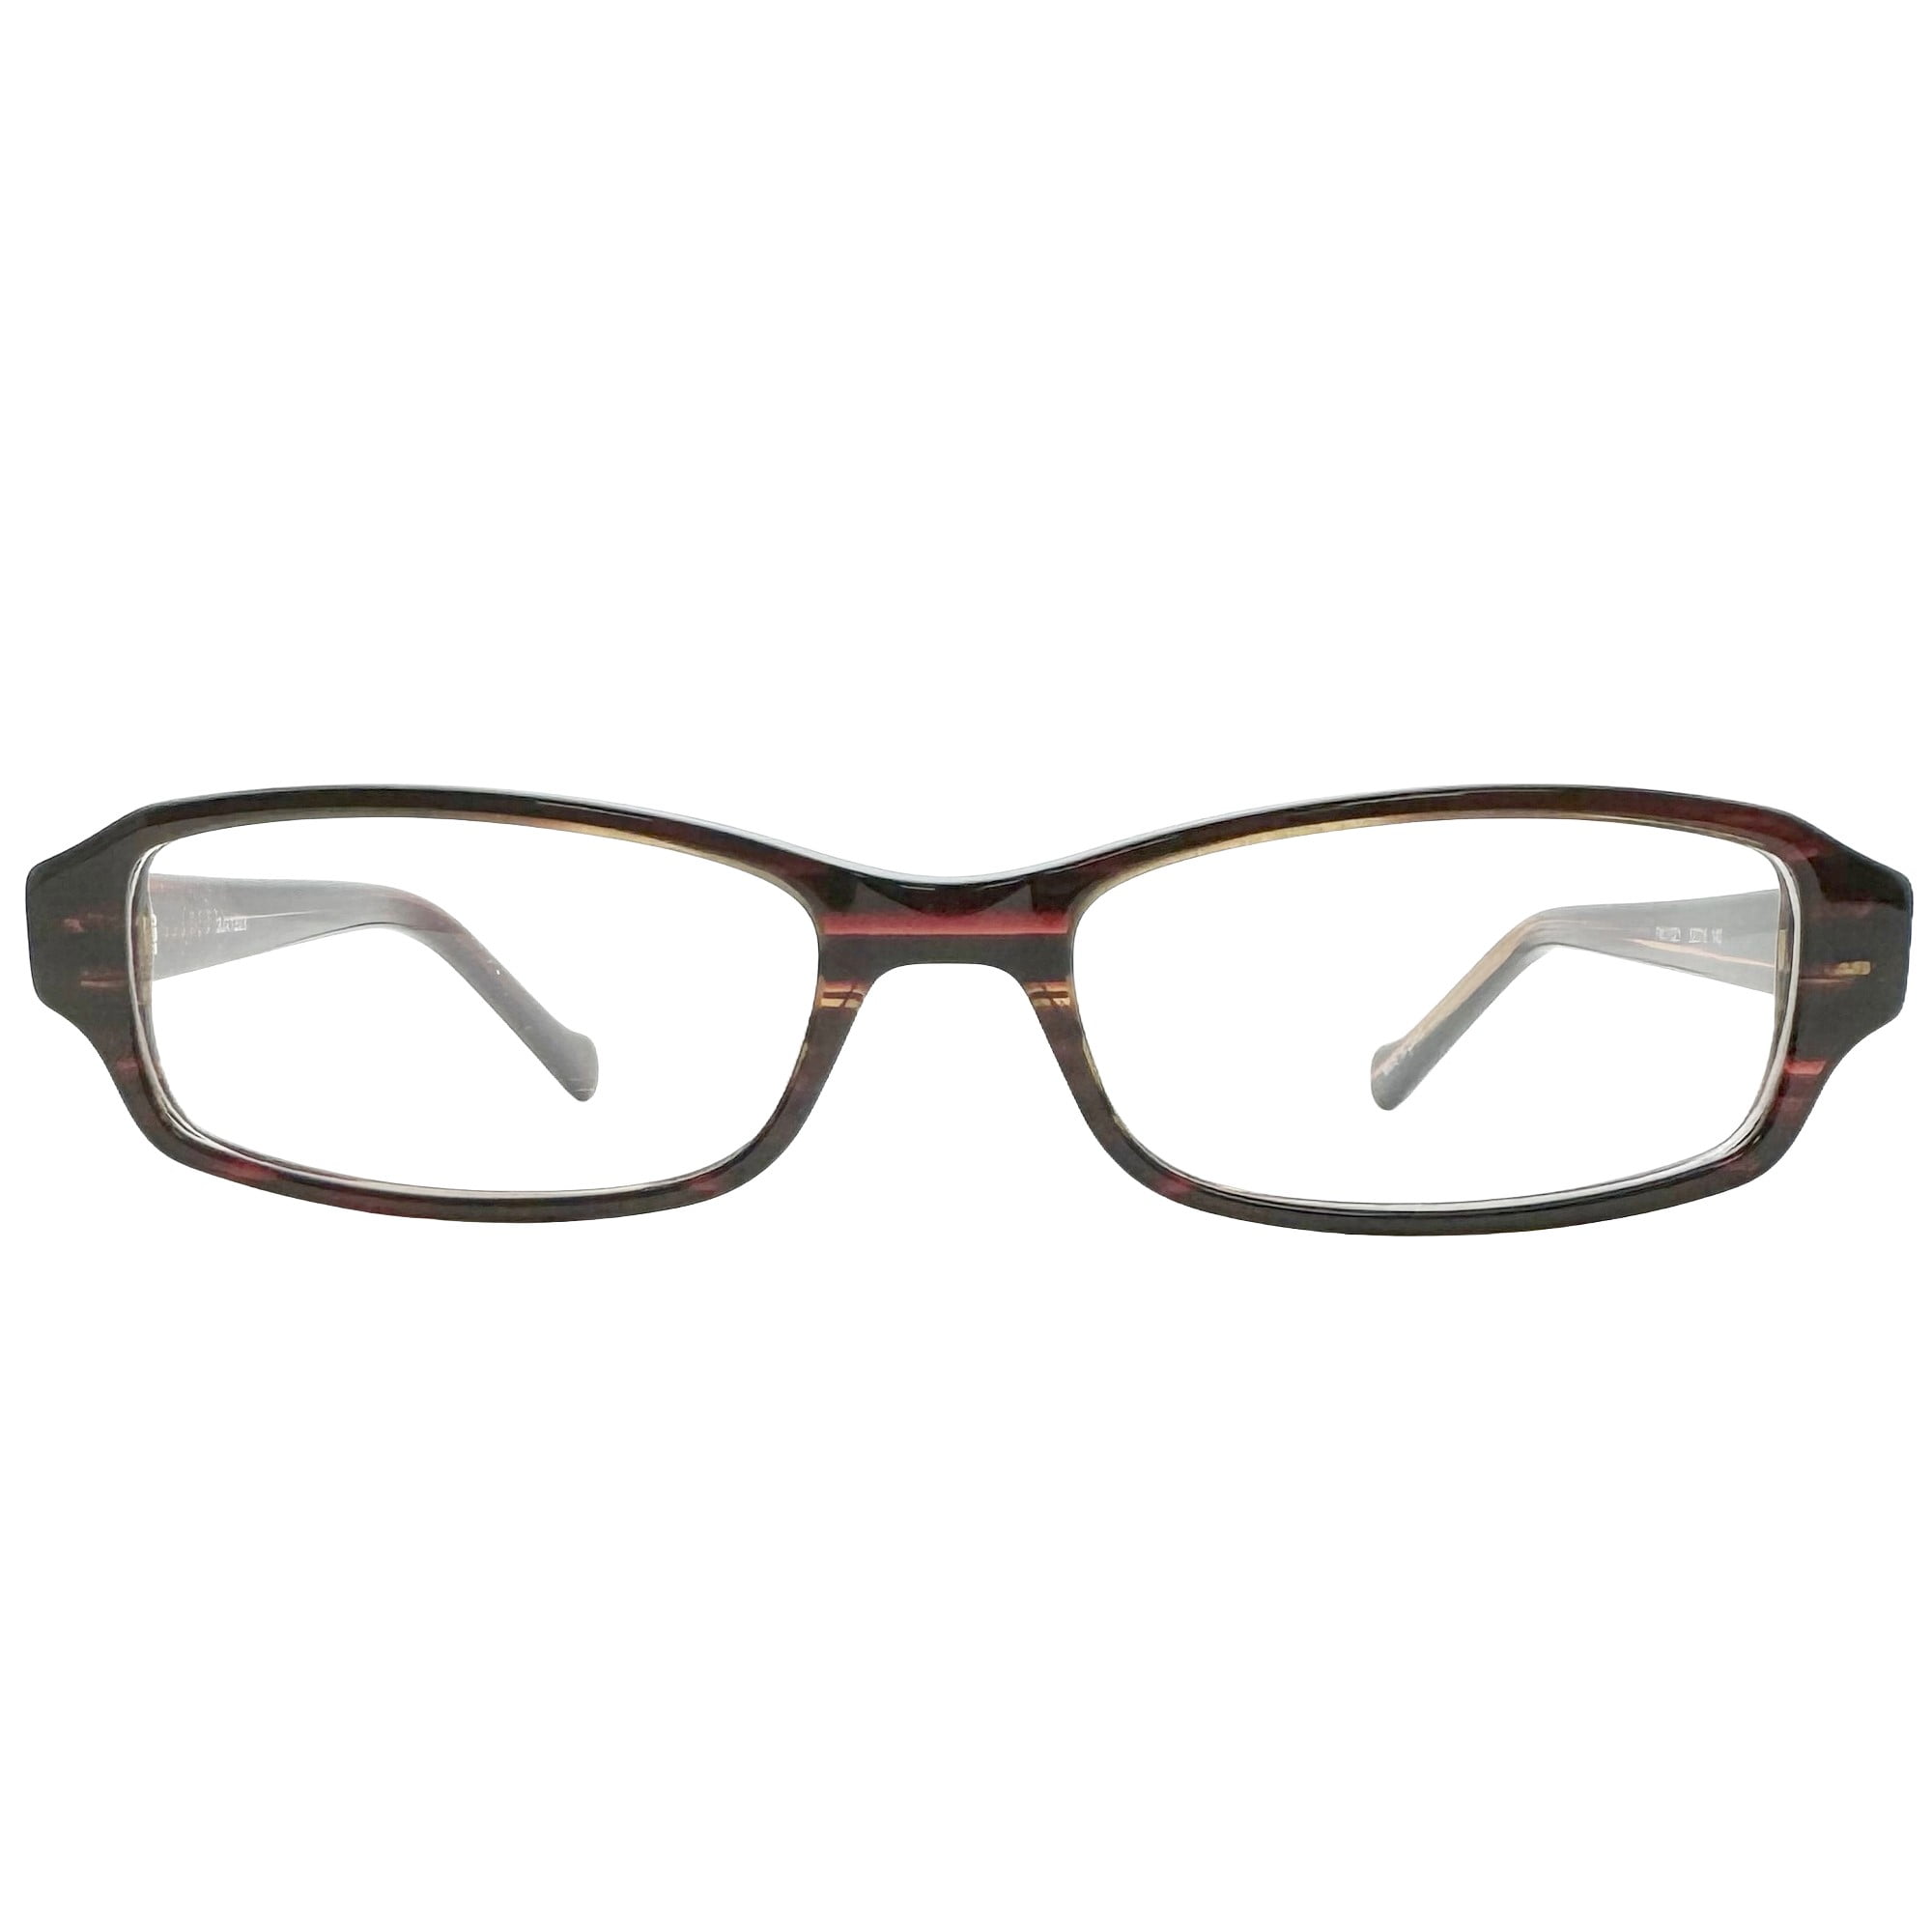 Walmart Women's Glasses, FM11021, Brown Stripe, 52-16-140, with Case